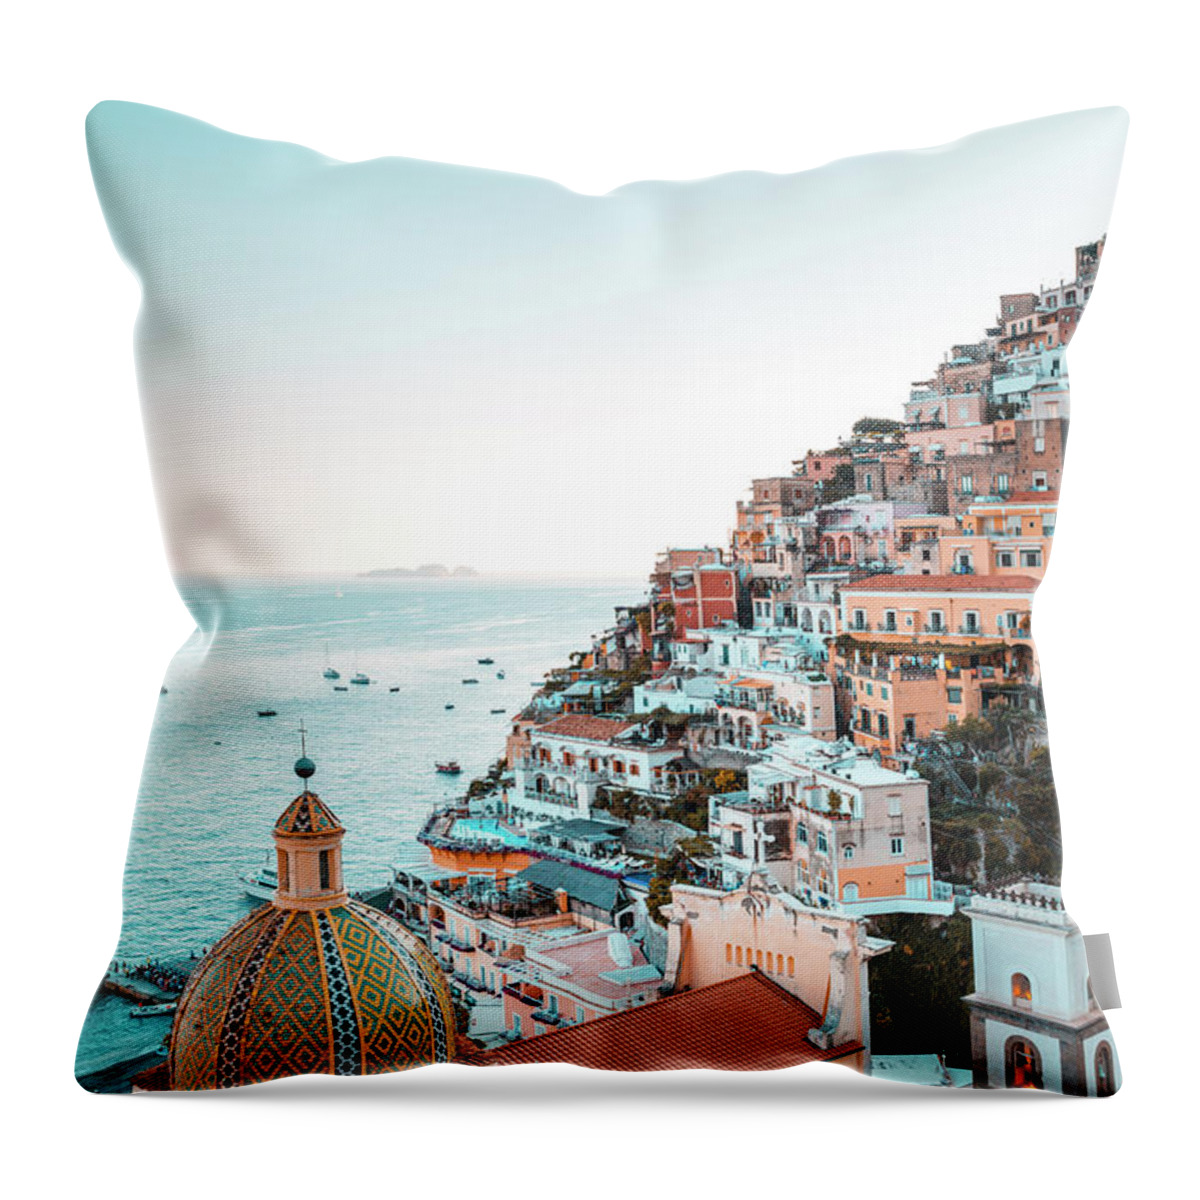 Blue Throw Pillow featuring the photograph Positano, Amalfi Coast, Italy #6 by Francesco Riccardo Iacomino